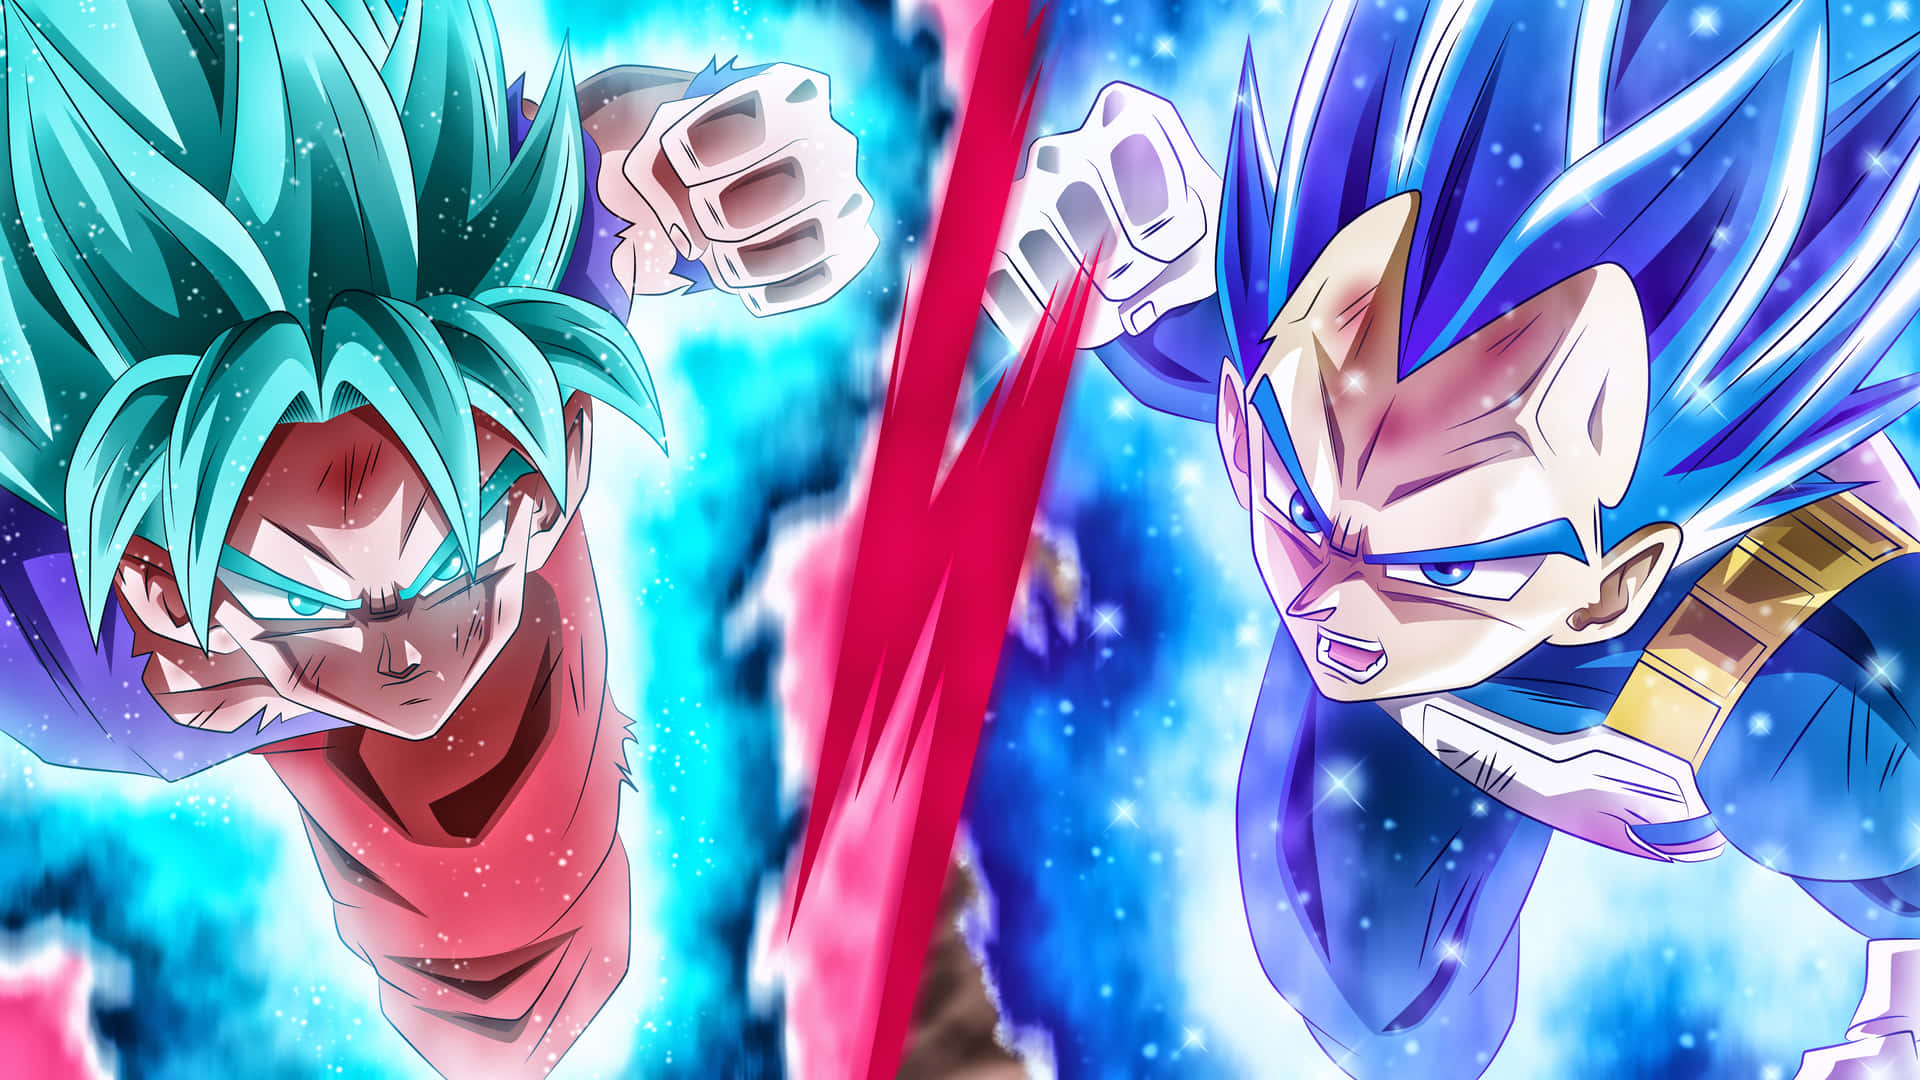 Goku and Vegeta Team Up to Fight a Powerful Foe Wallpaper